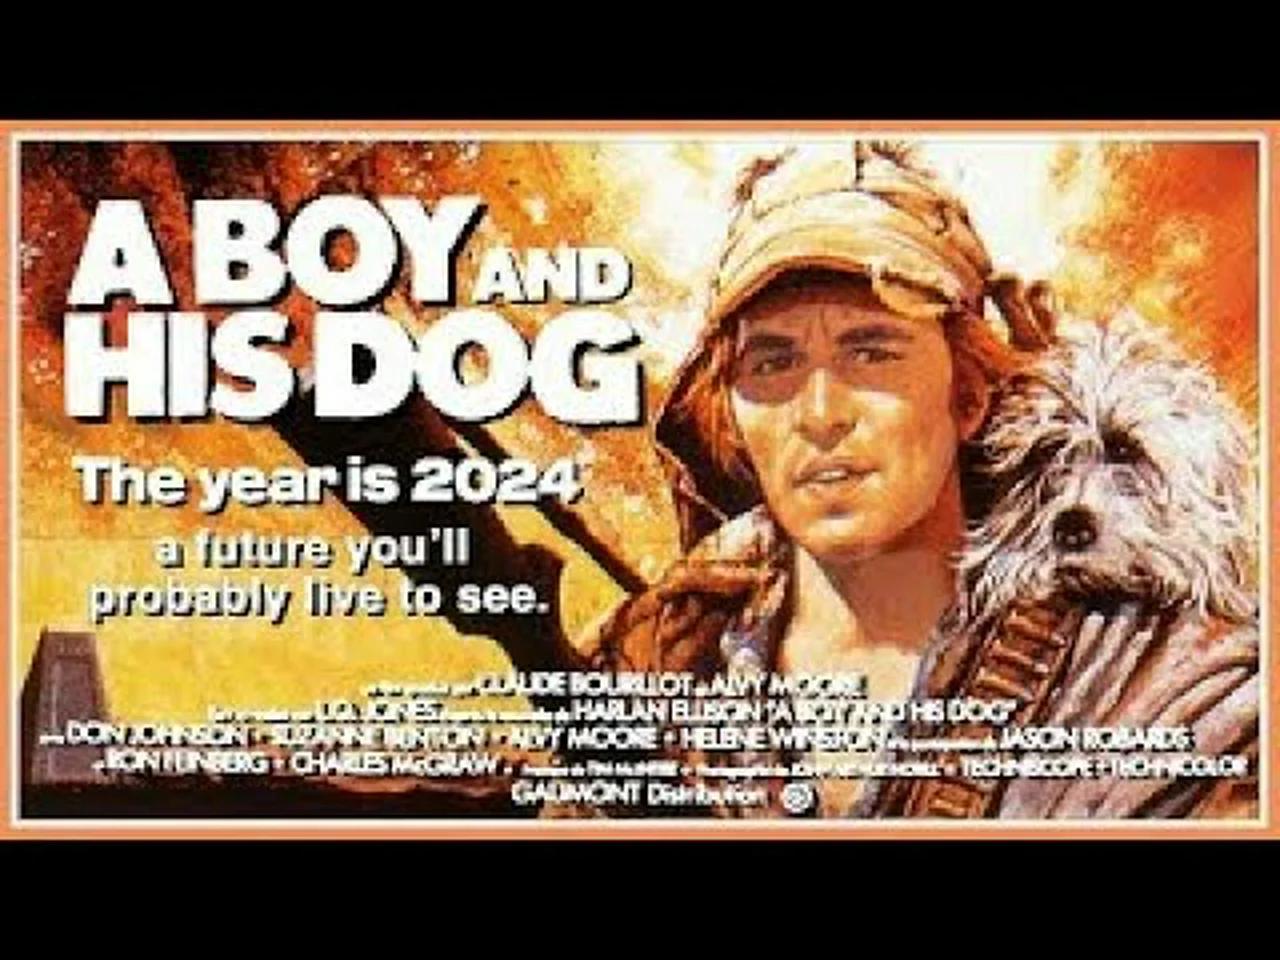 1975: A Boy and His Dog | #Post-Apocalytic Classic Retro Sci-Fi | #HarlanEllison | #Studio64Podcasts